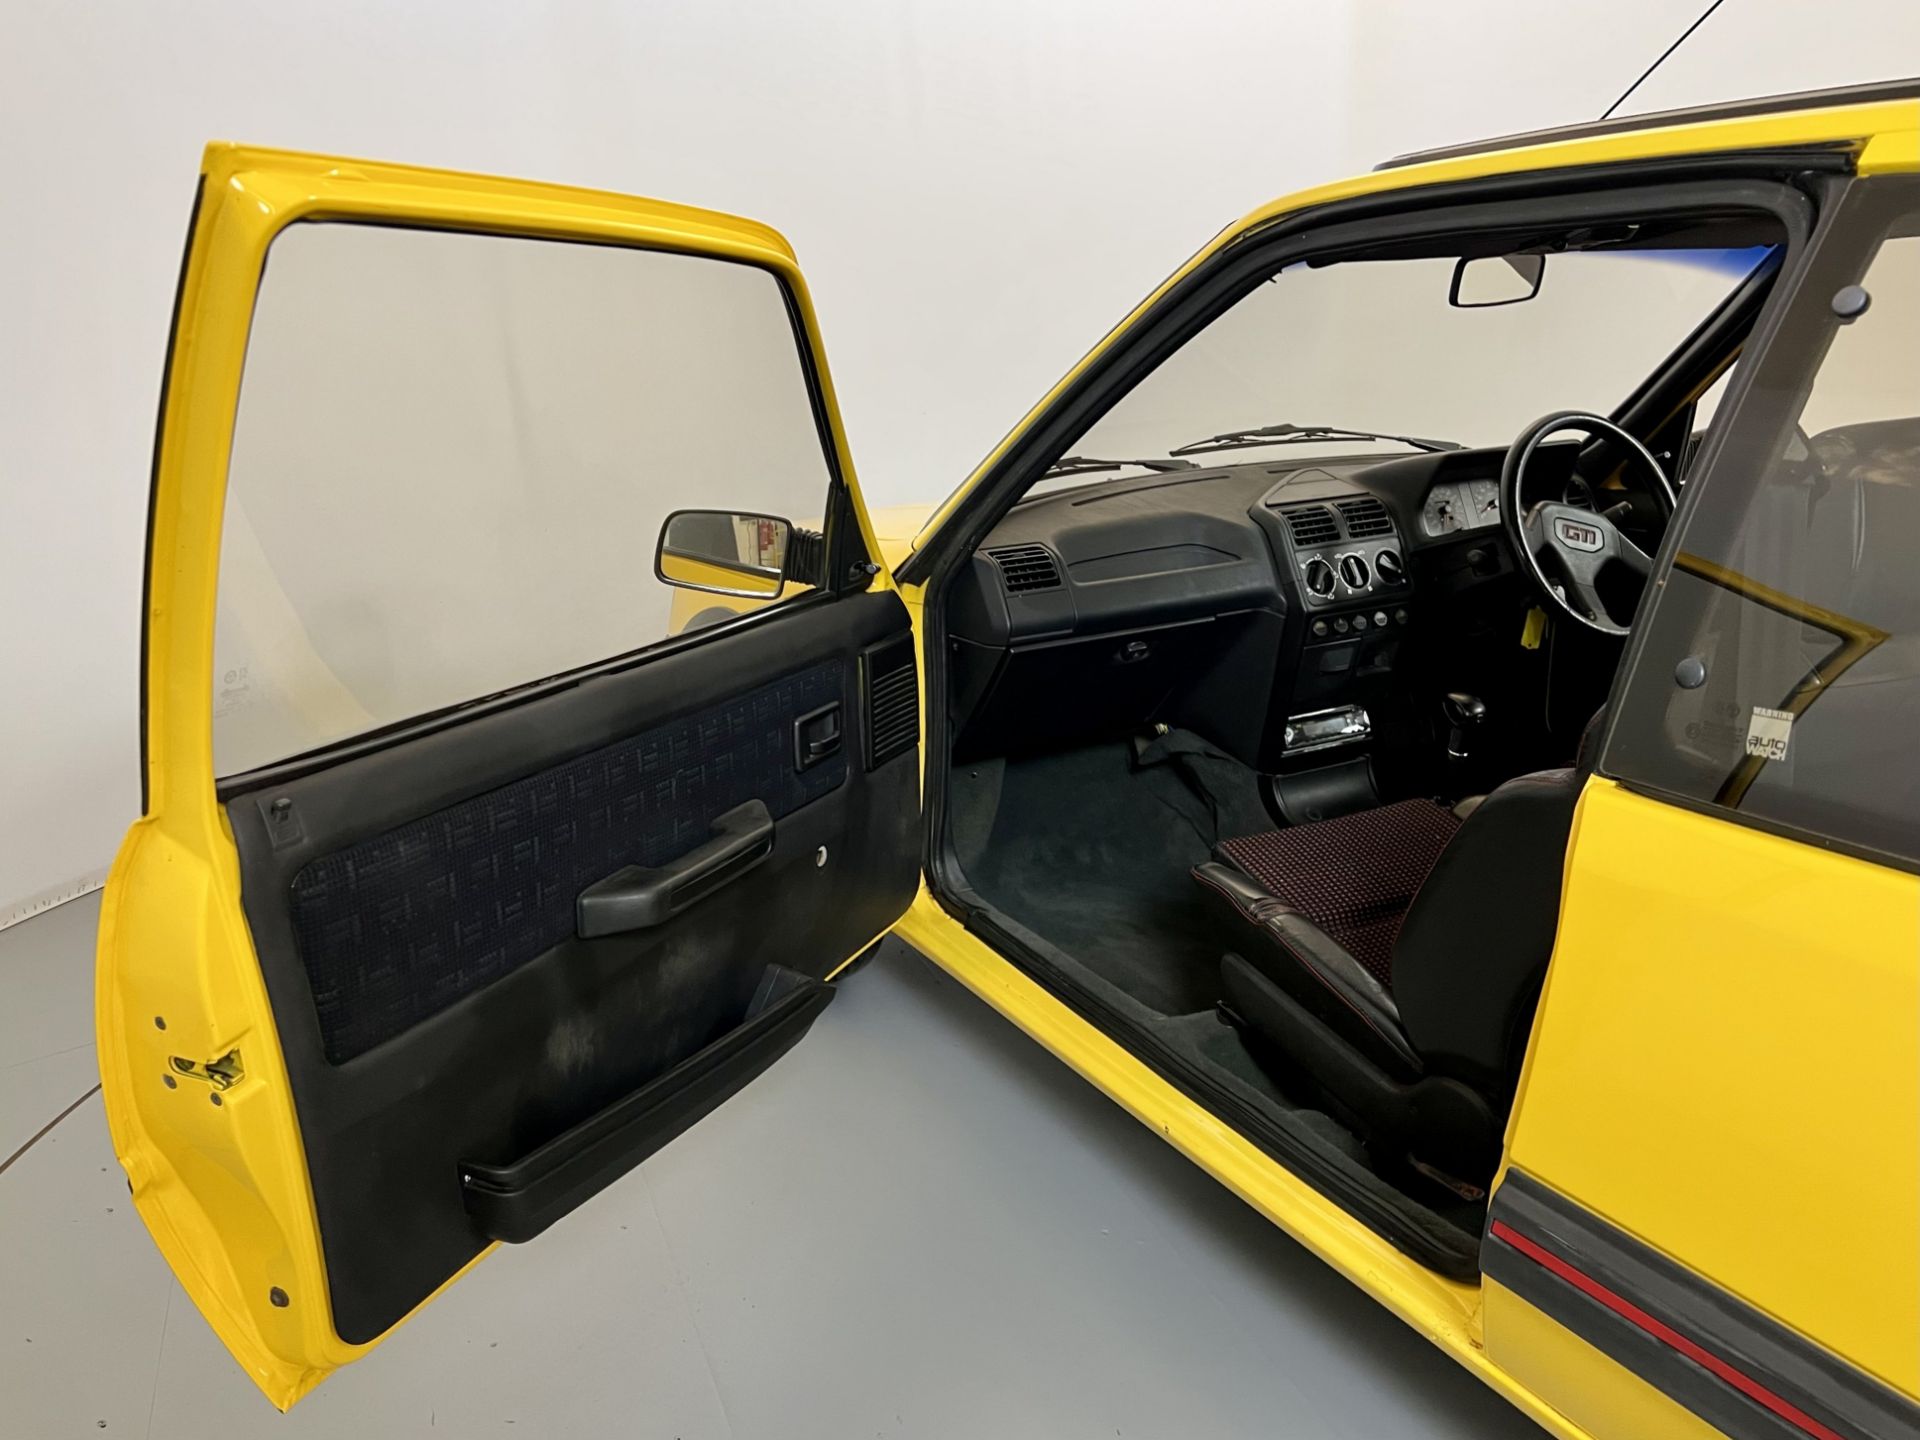 Peugeot 205 GTI Prototype - Image 23 of 30